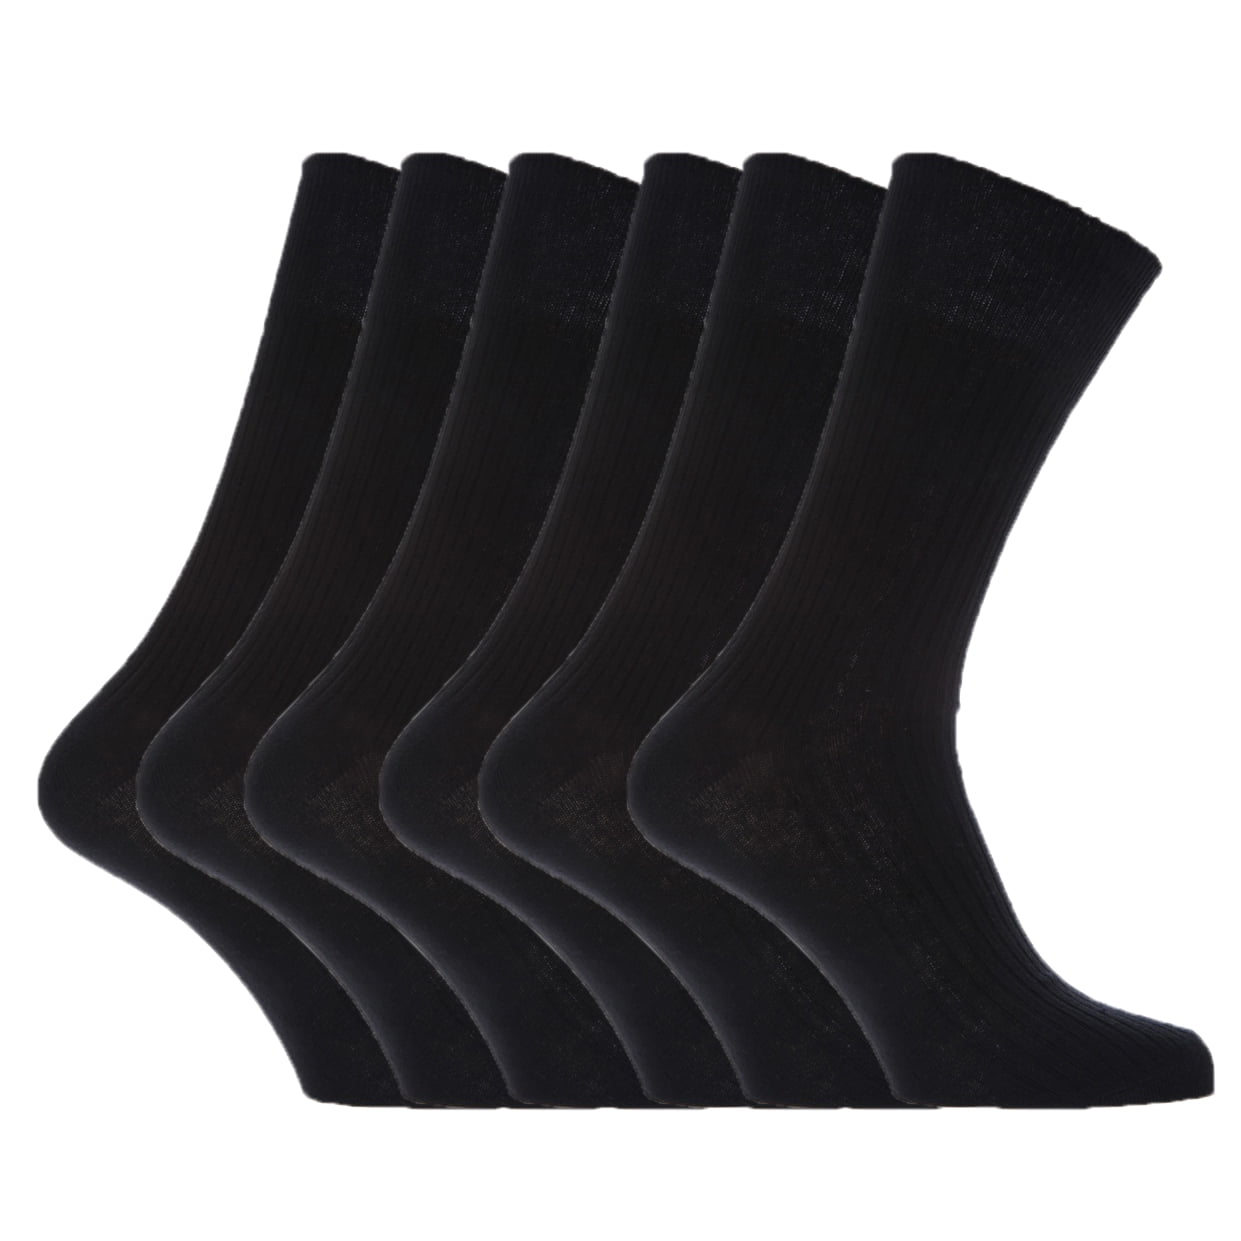 48 Pairs Purista Mens Non-Elastic Big Foot Socks Size 11-14 Wholesale Job lot 